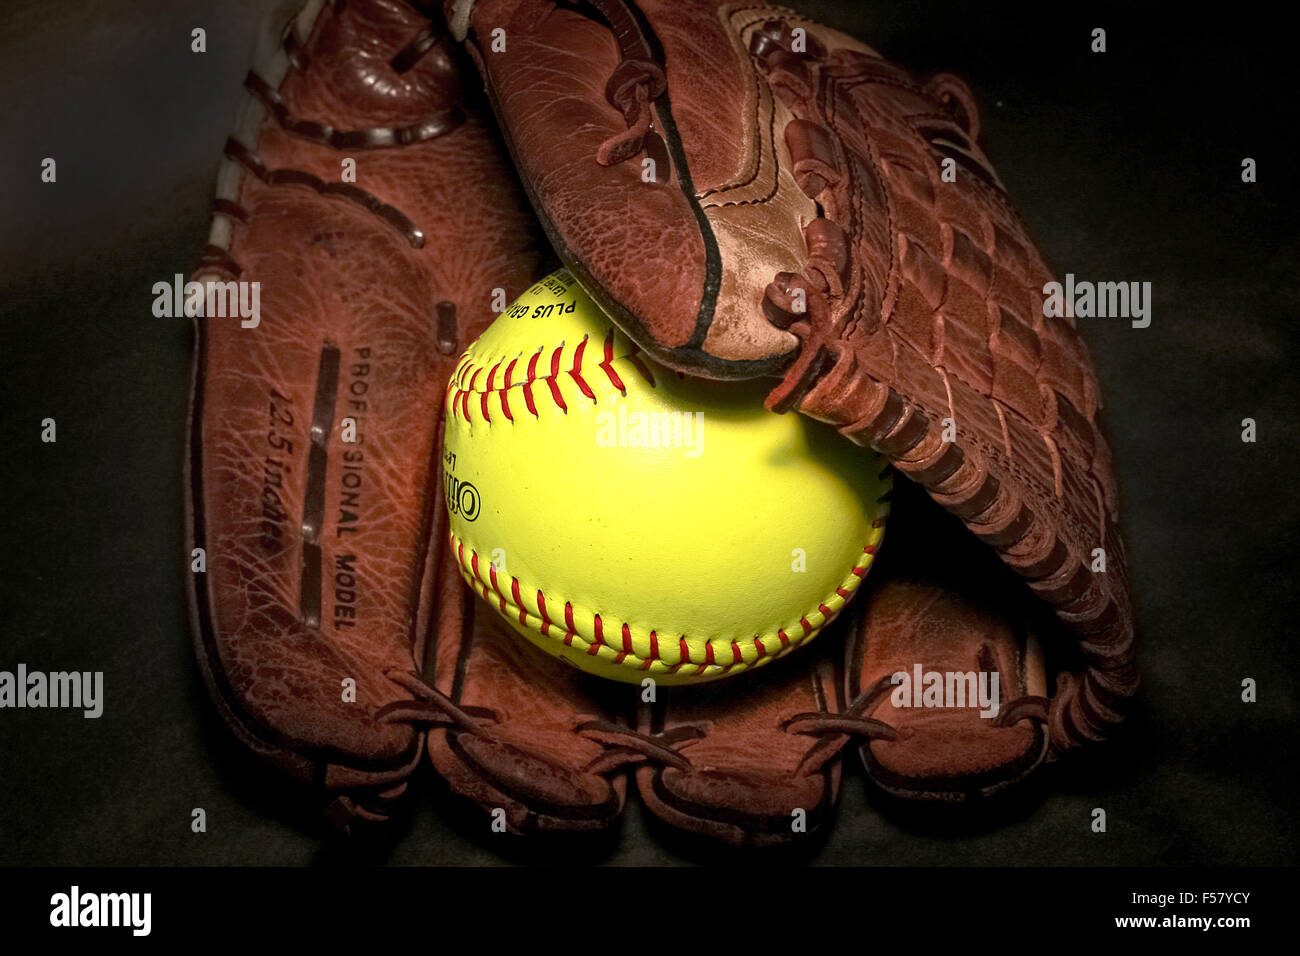 Closeup of a Softball Glove and ball Stock Photo